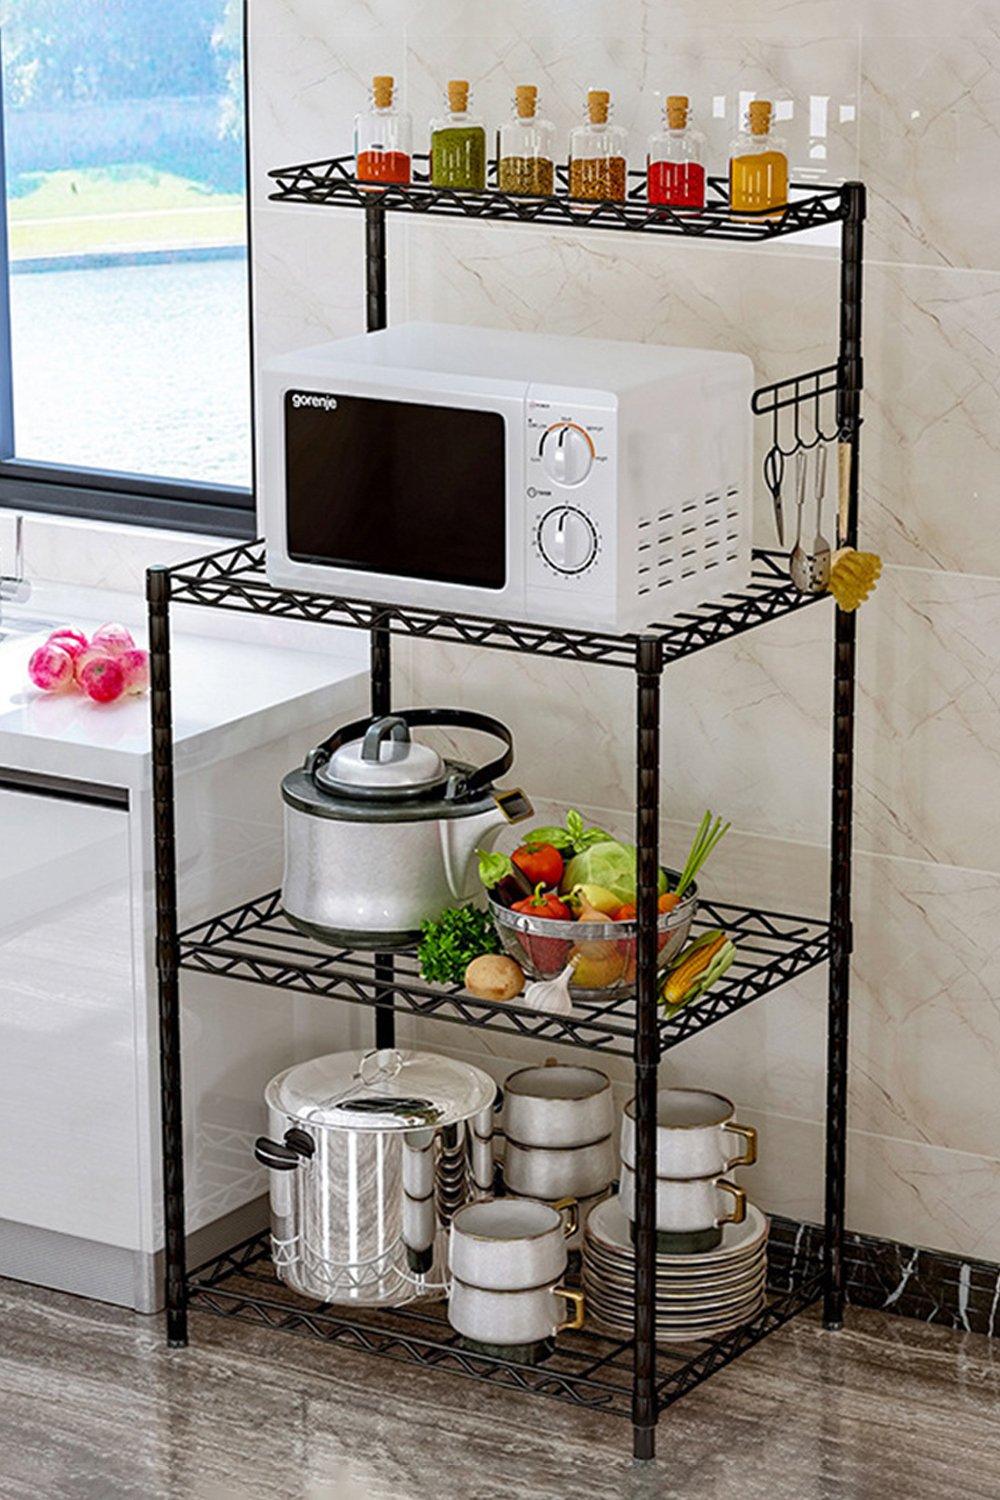 4-Tier Microwave Storage Rack Shelf Organiser with Hooks for Kitchen